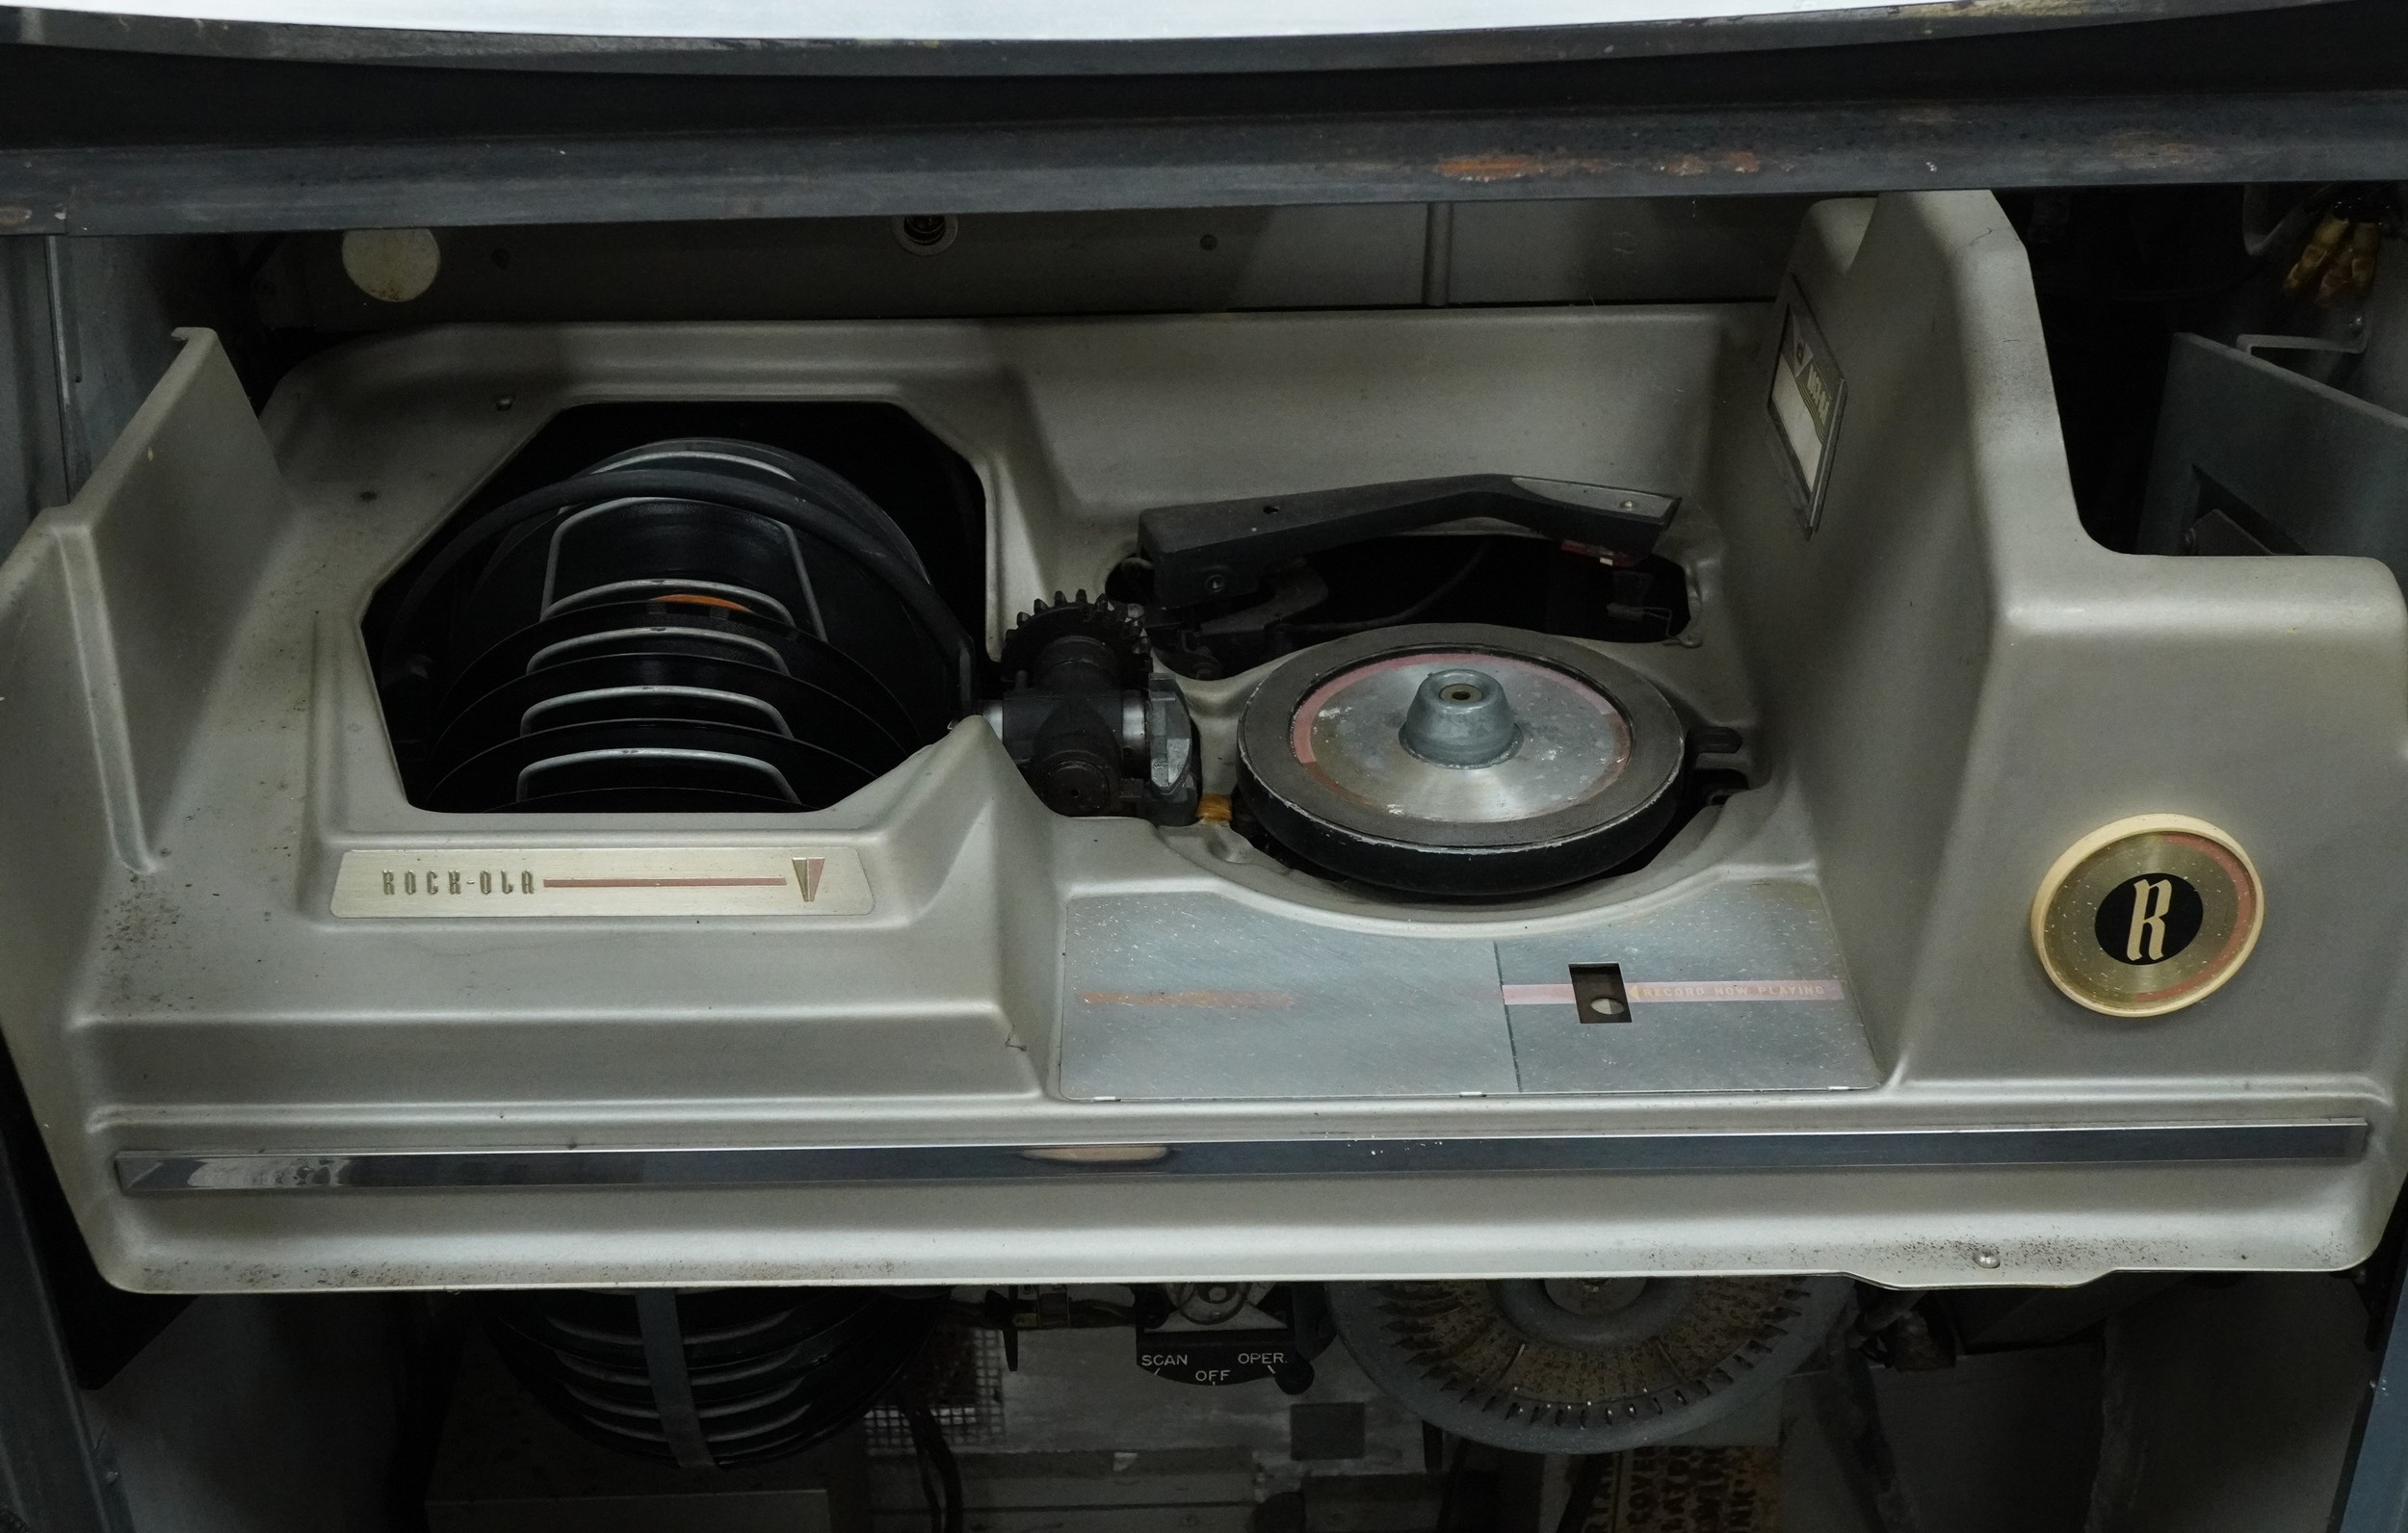 Rock Ola Capri II 1960s/70s 45rpm juke box, model number 414, 127cm H x 80cm W x 60cm D - Image 4 of 10